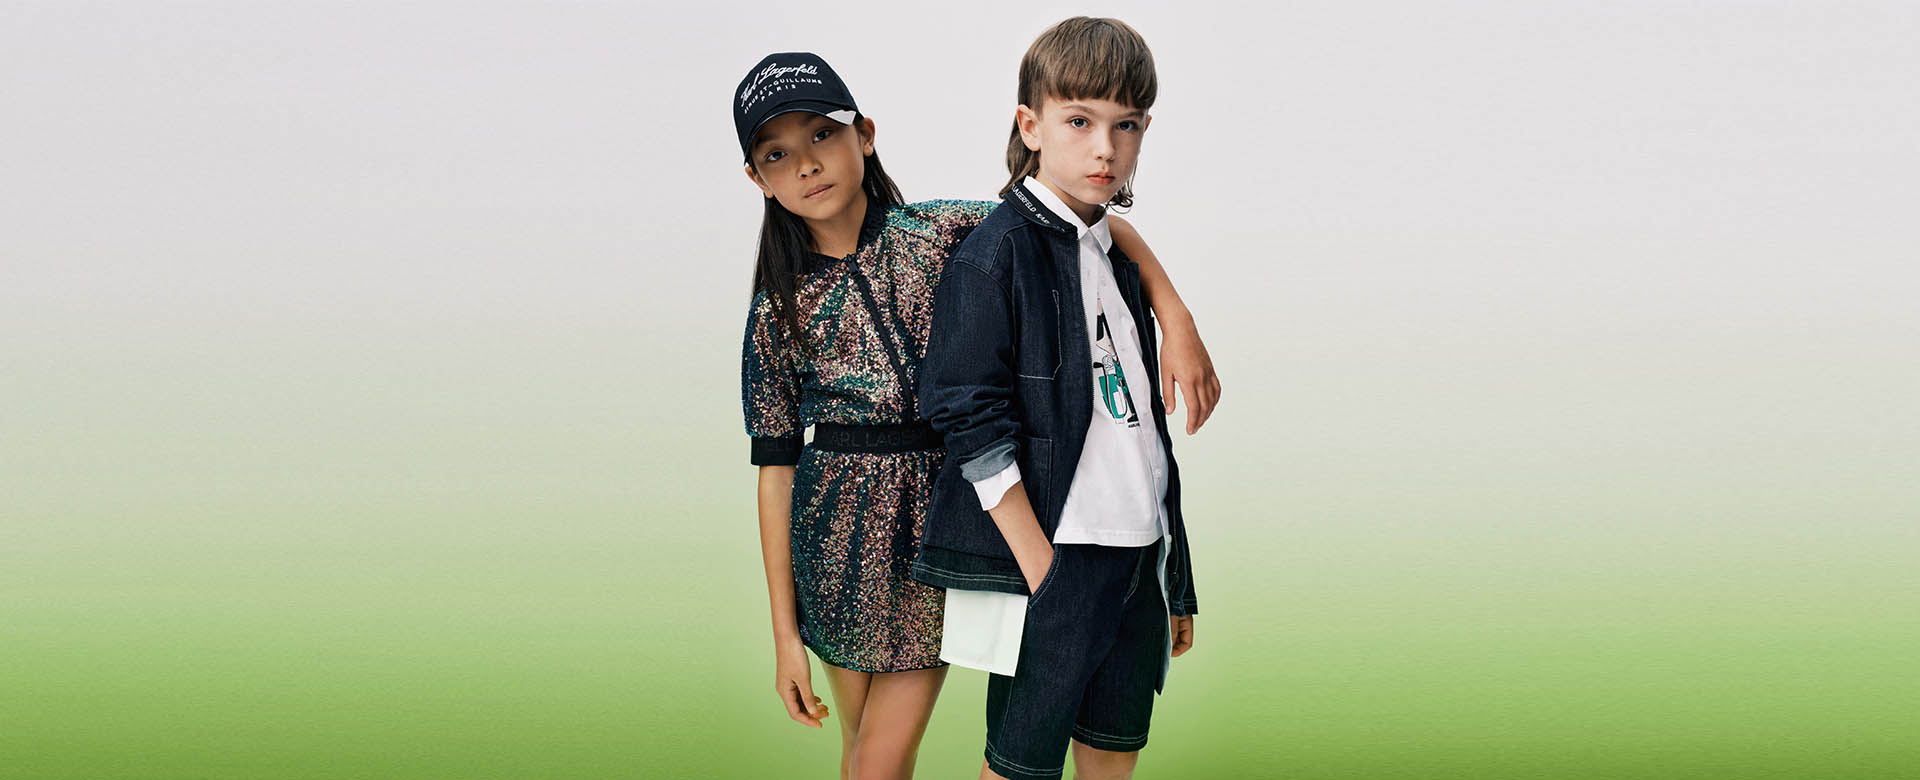 Vestido y disfraz infantil de lentejuelas Karl Lagerfeld Kids